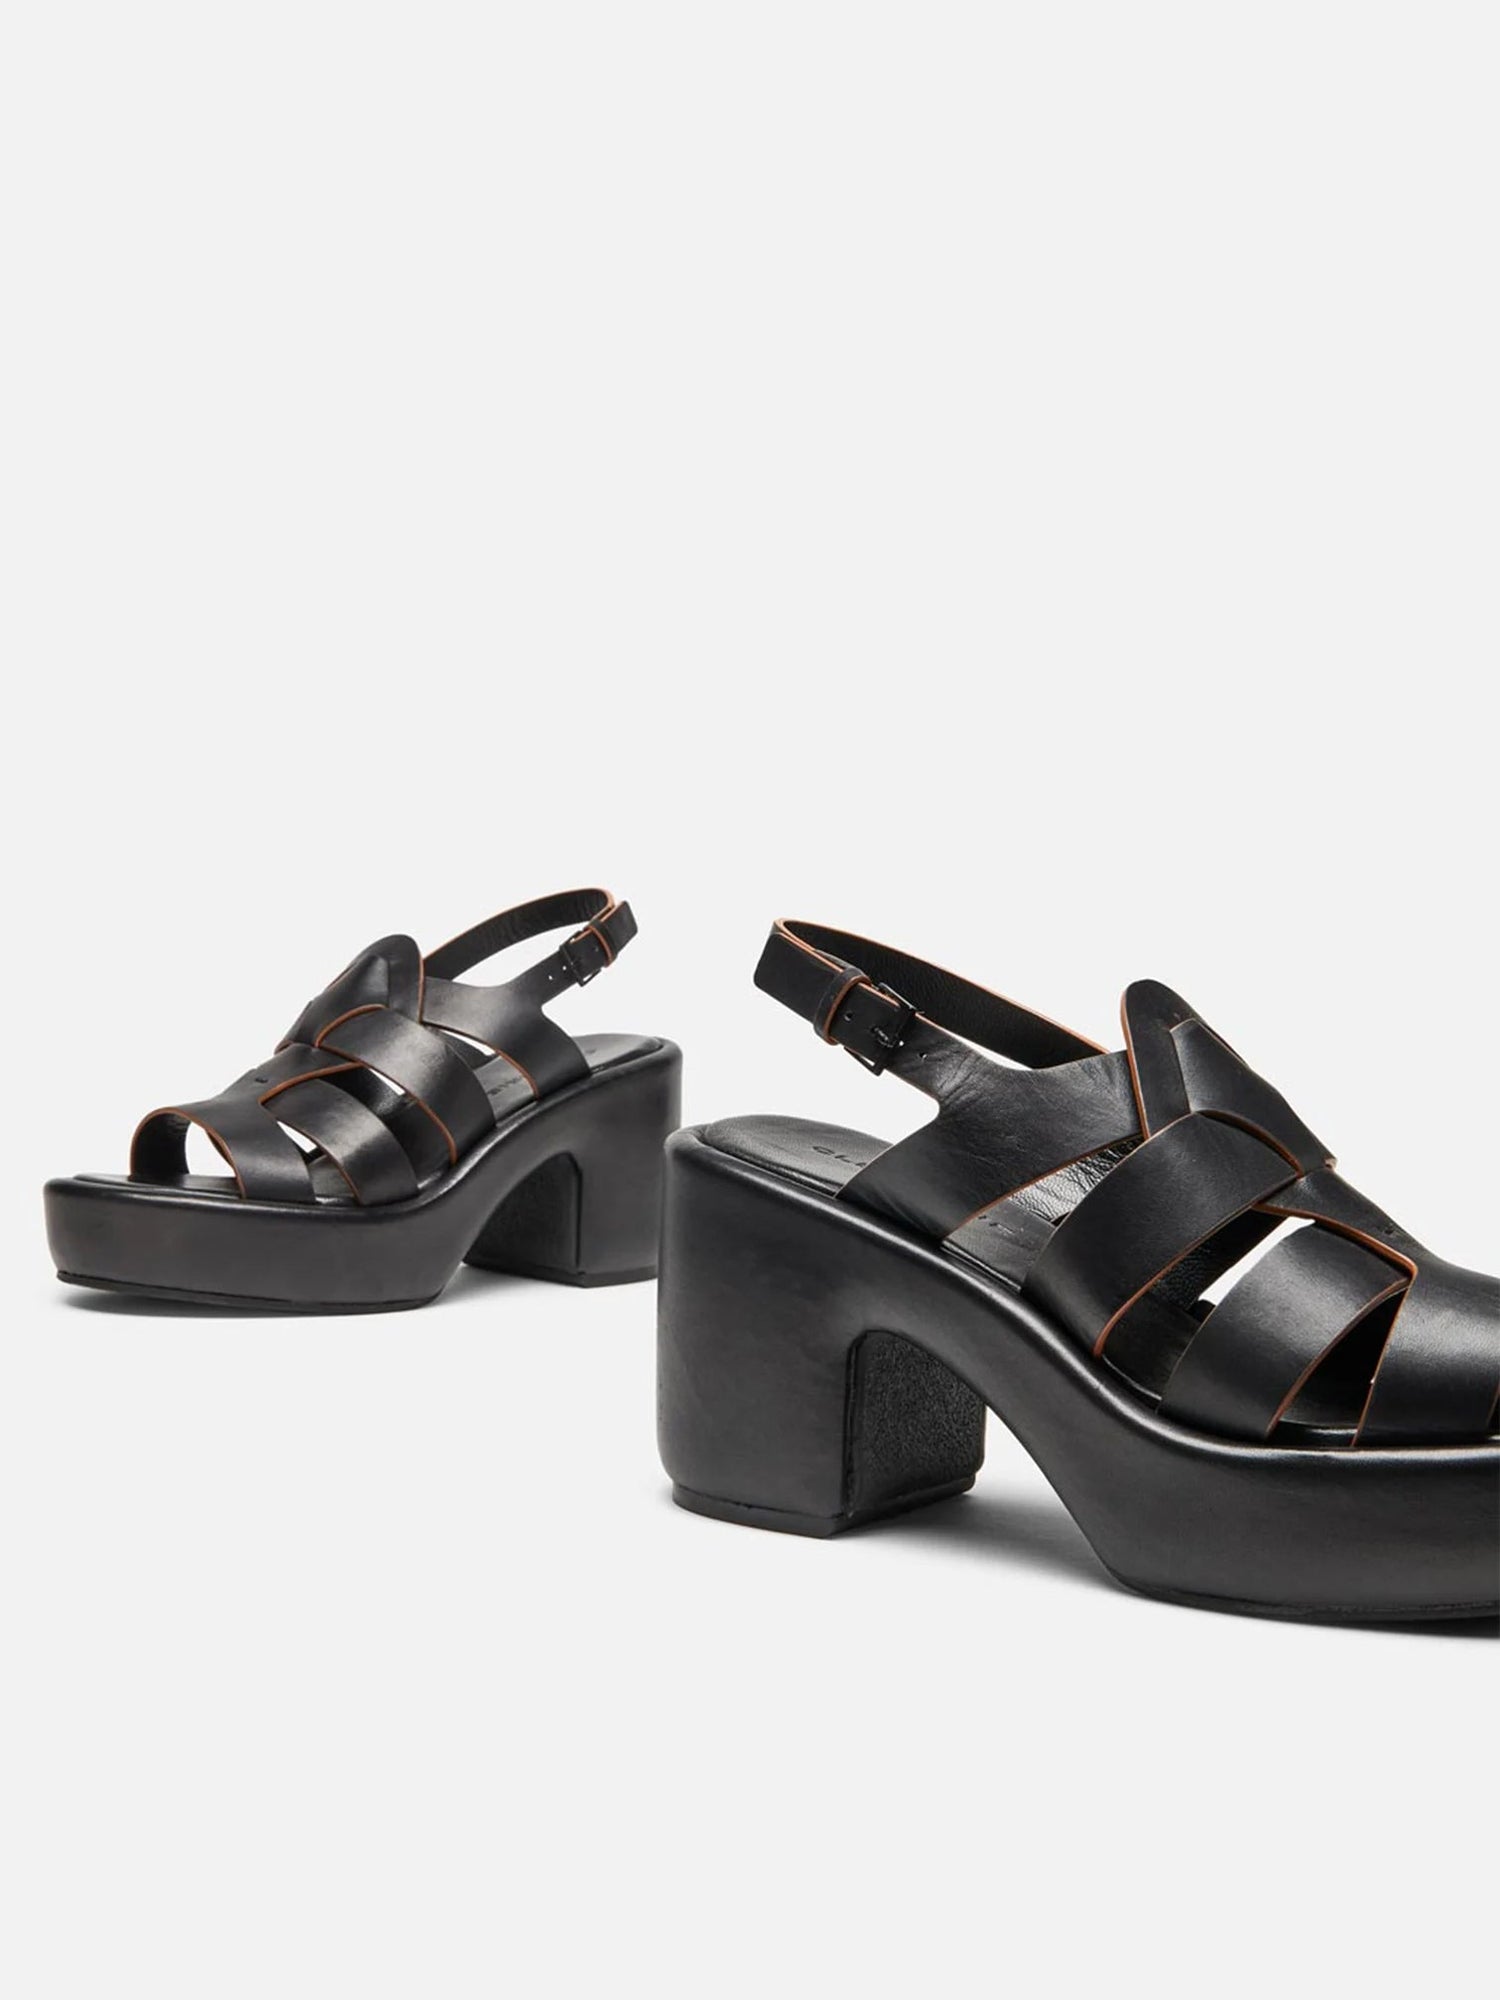 SANDALS - DIVINA sandals, black smooth calfskin || OUTLET - DIVINABLKLCAM350 - Clergerie Paris - USA